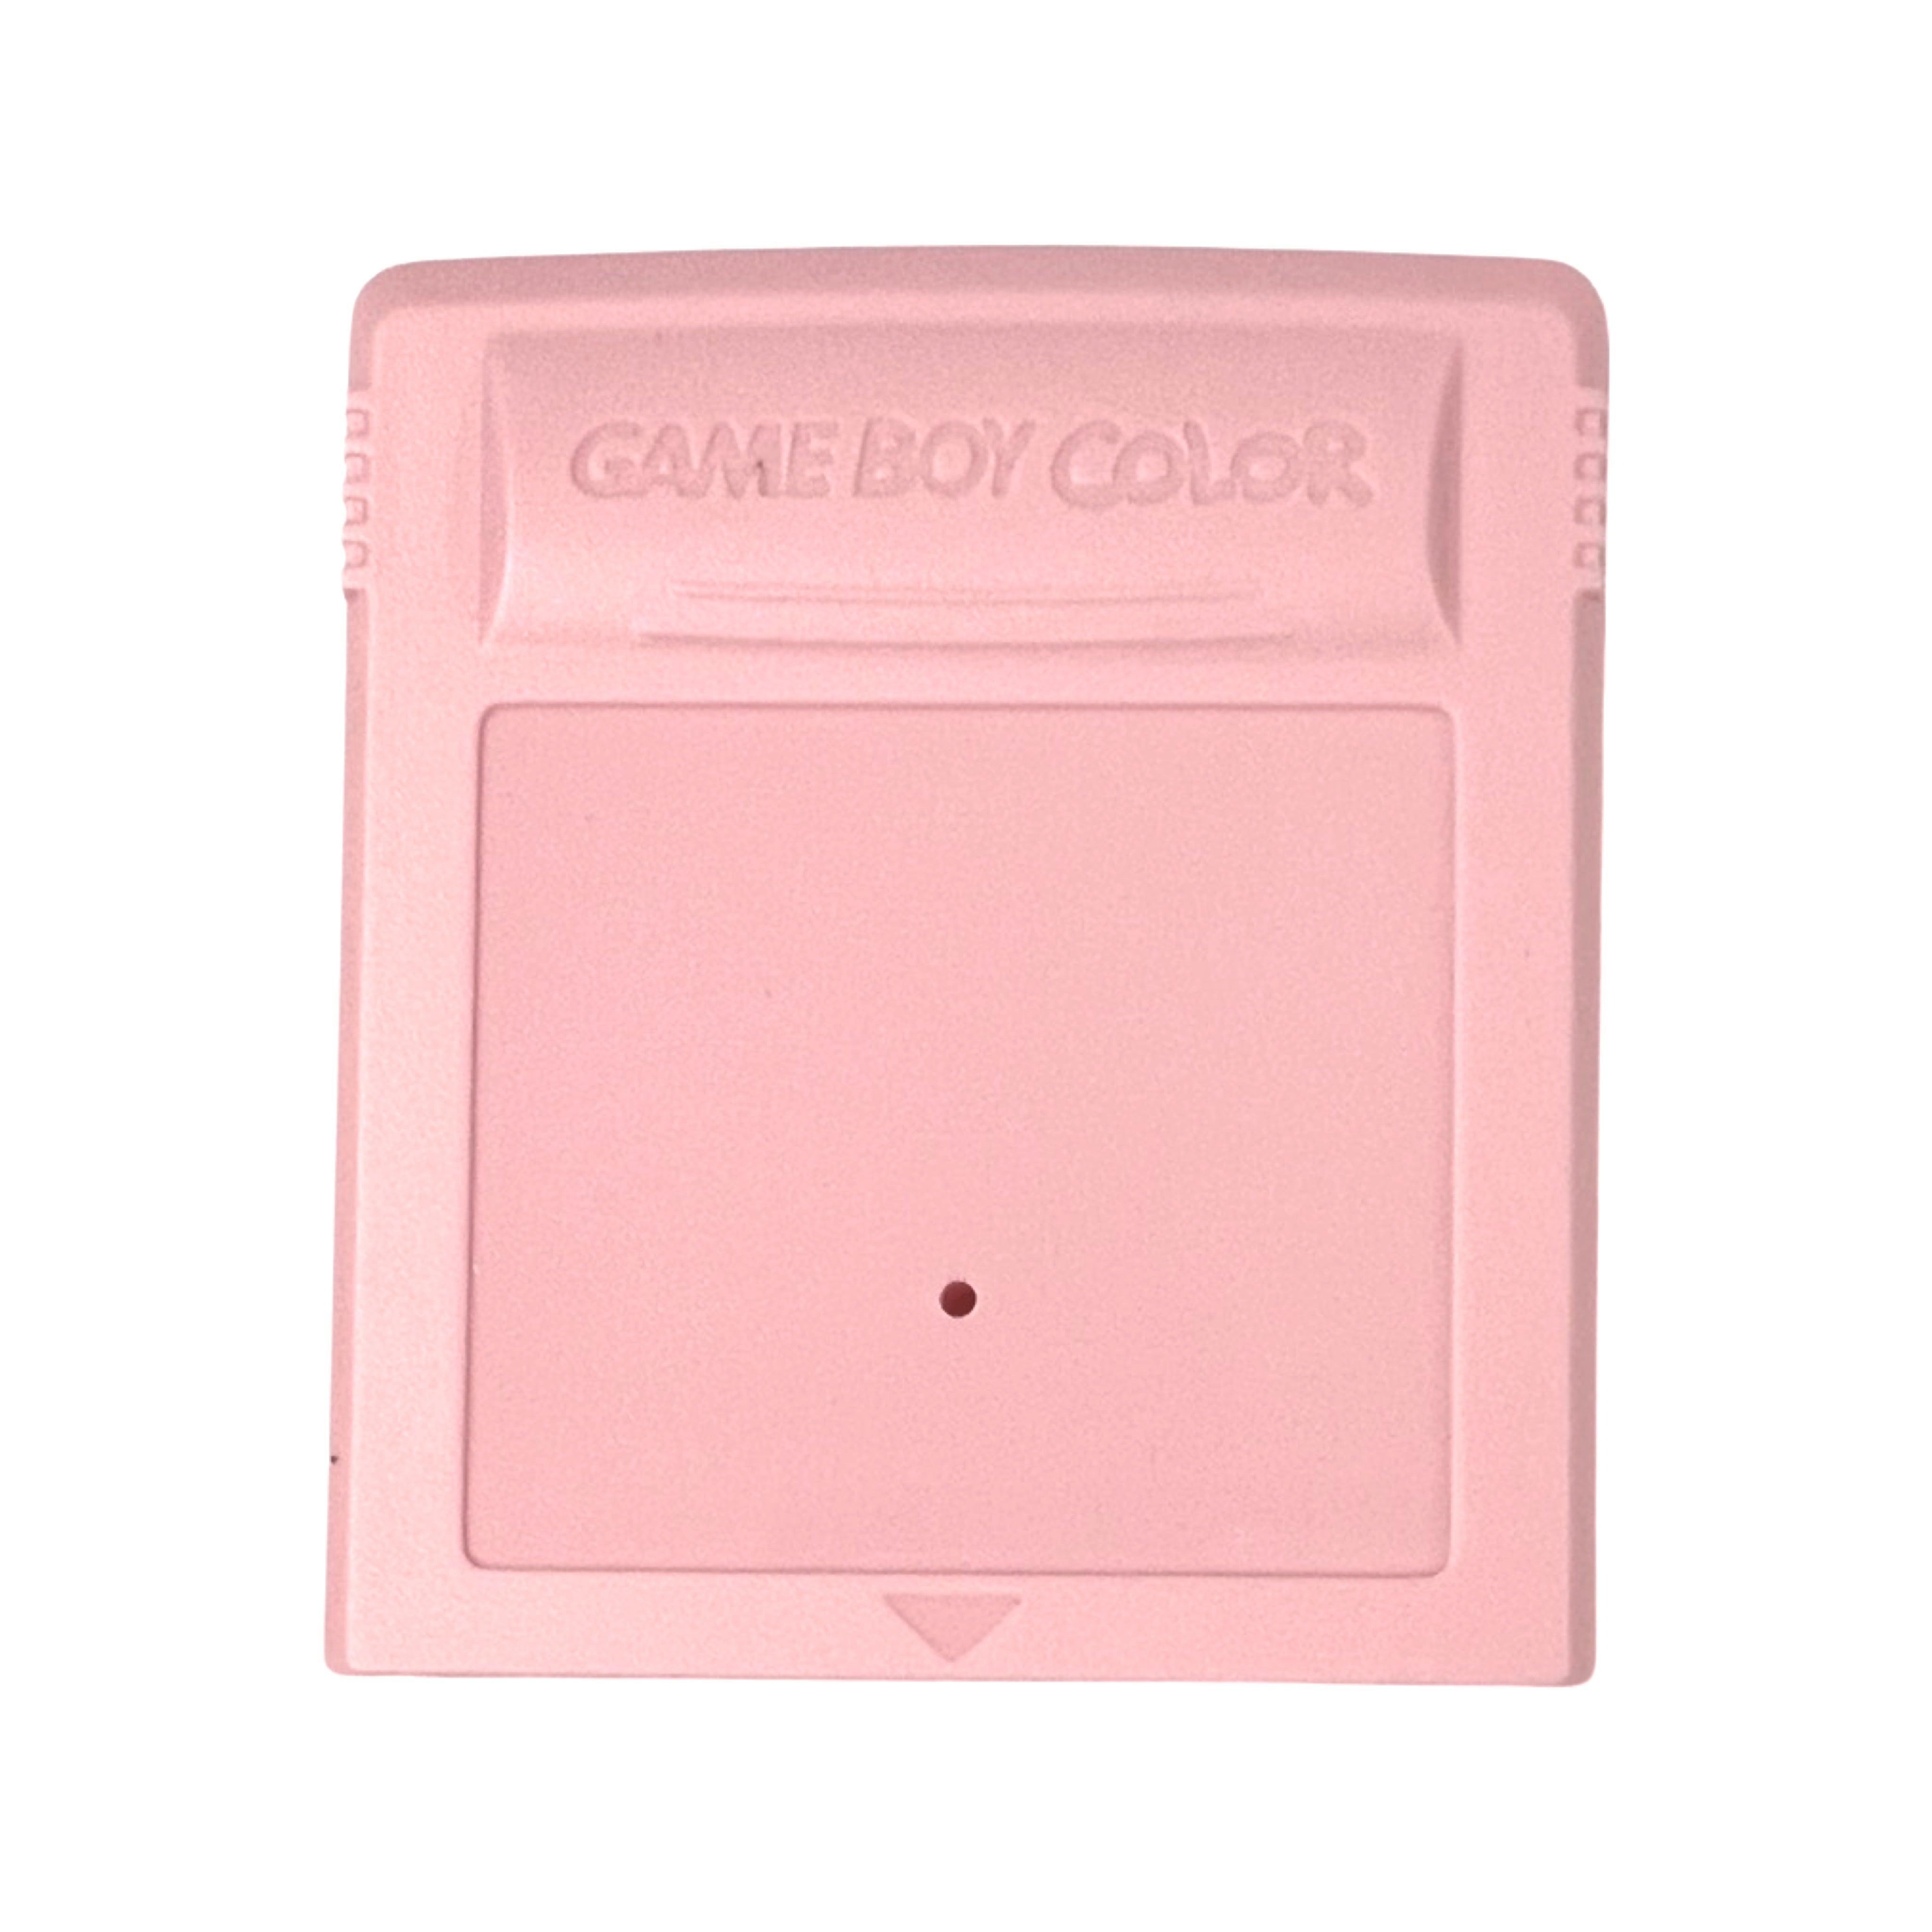 Pokemon Orange Nintendo Game Boy Color Video Game -  Israel